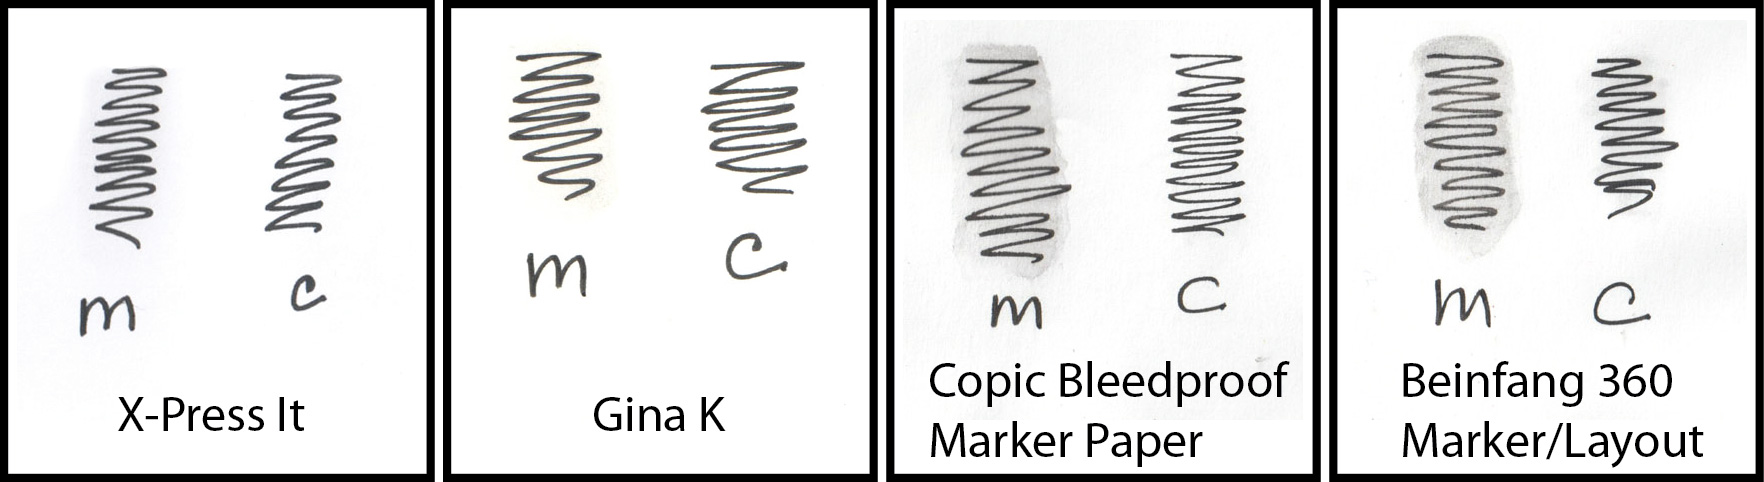 Copic Multiliner vs Pigma Micron: Does It Really Matter? — Vanilla Arts Co.